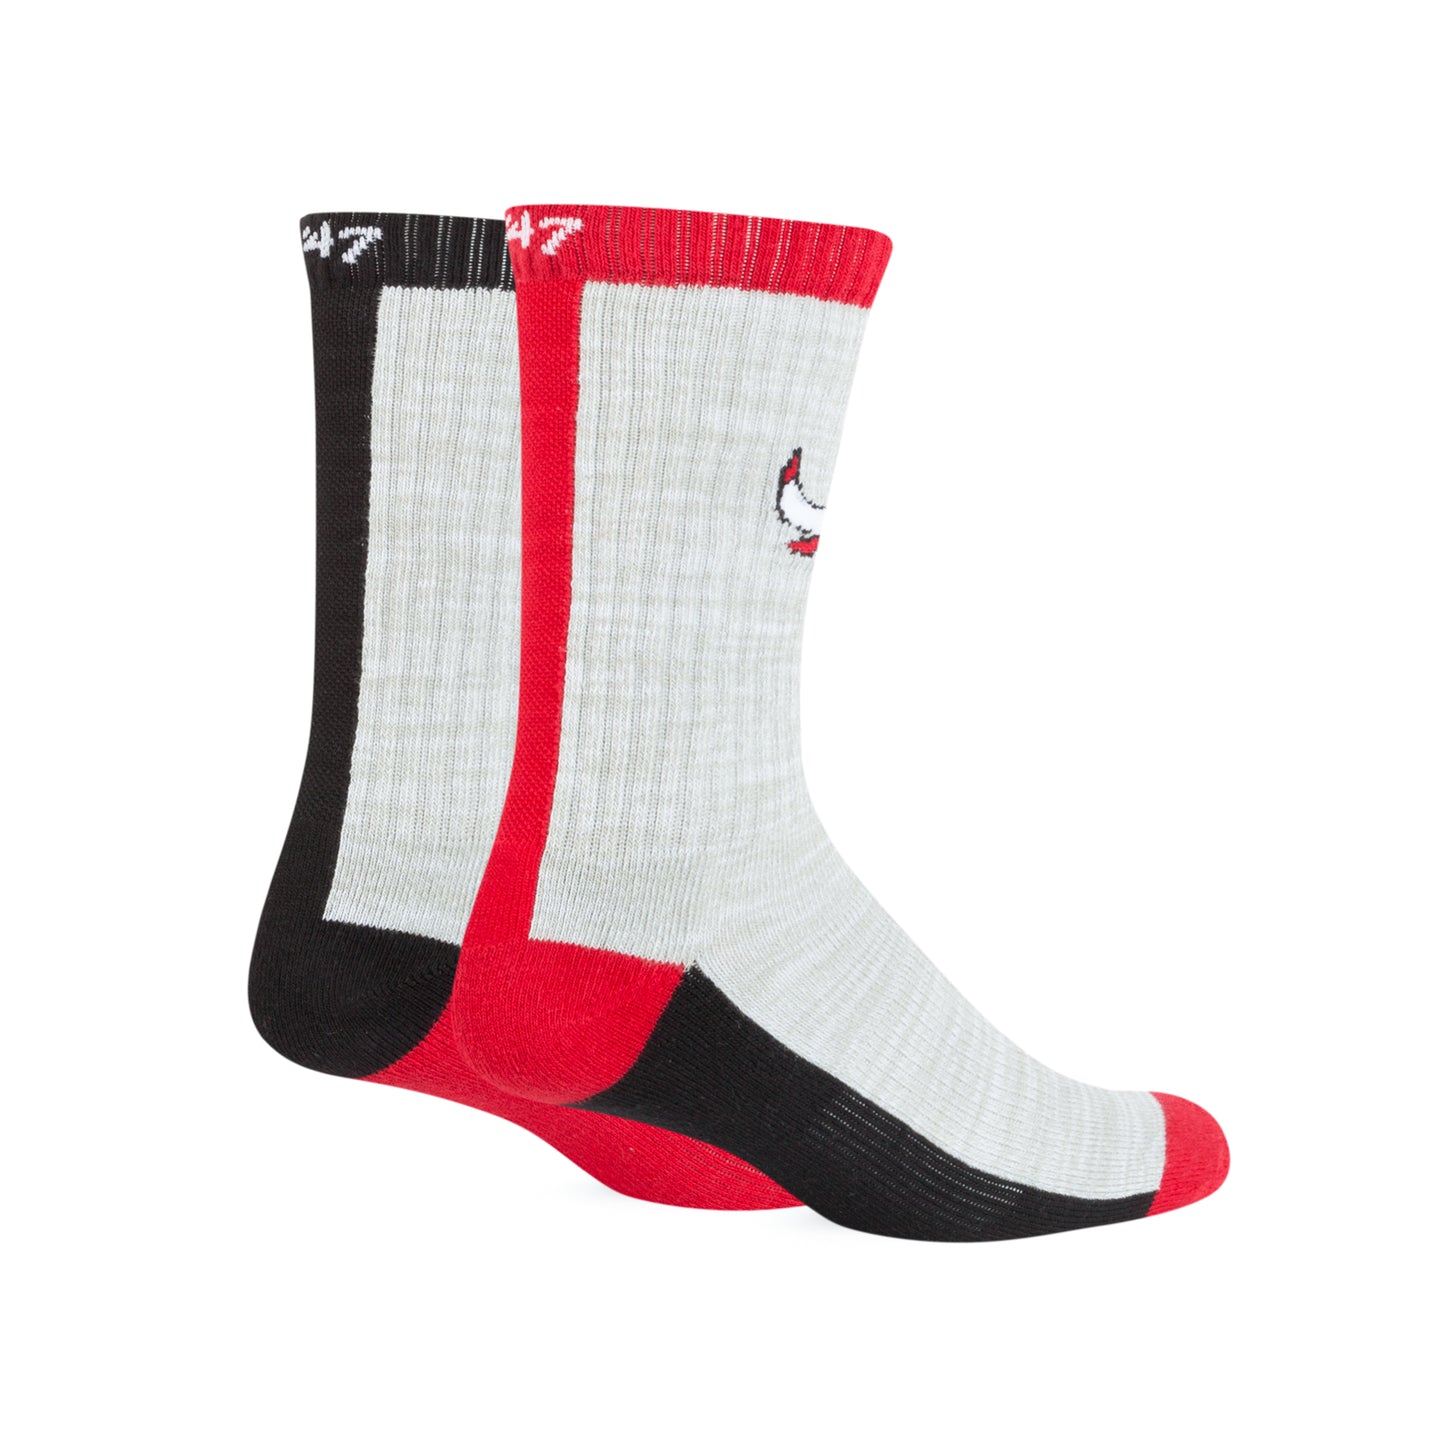 Chicago Bulls Grey/ Black and Red 47 Socks